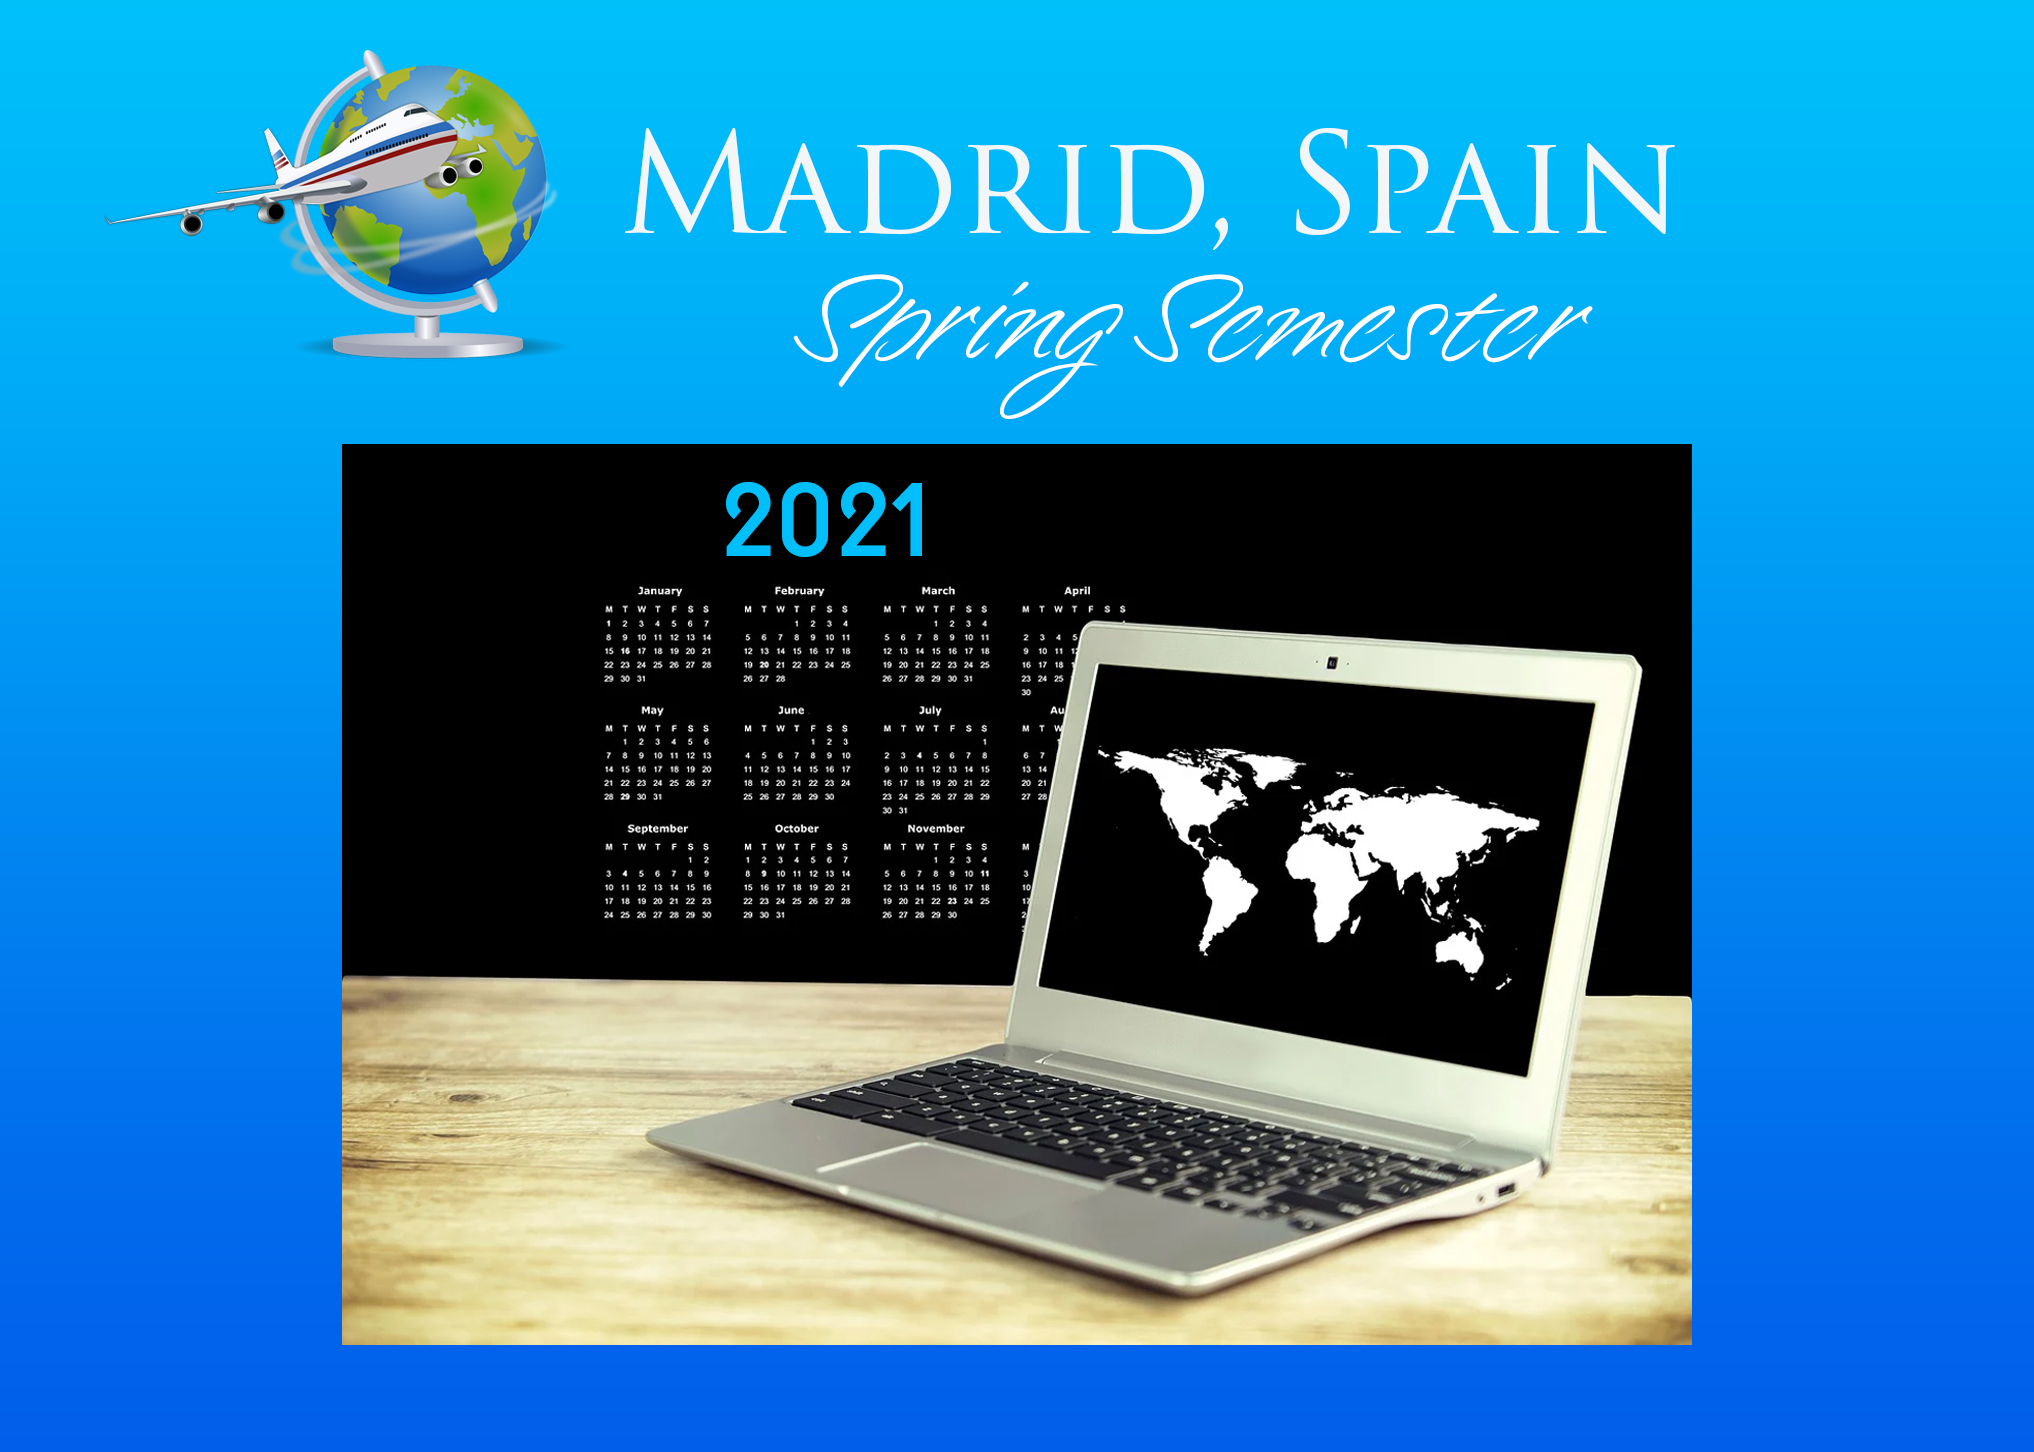 Study Abroad program to Madrid, Spain tentative to continue amid COVID-19